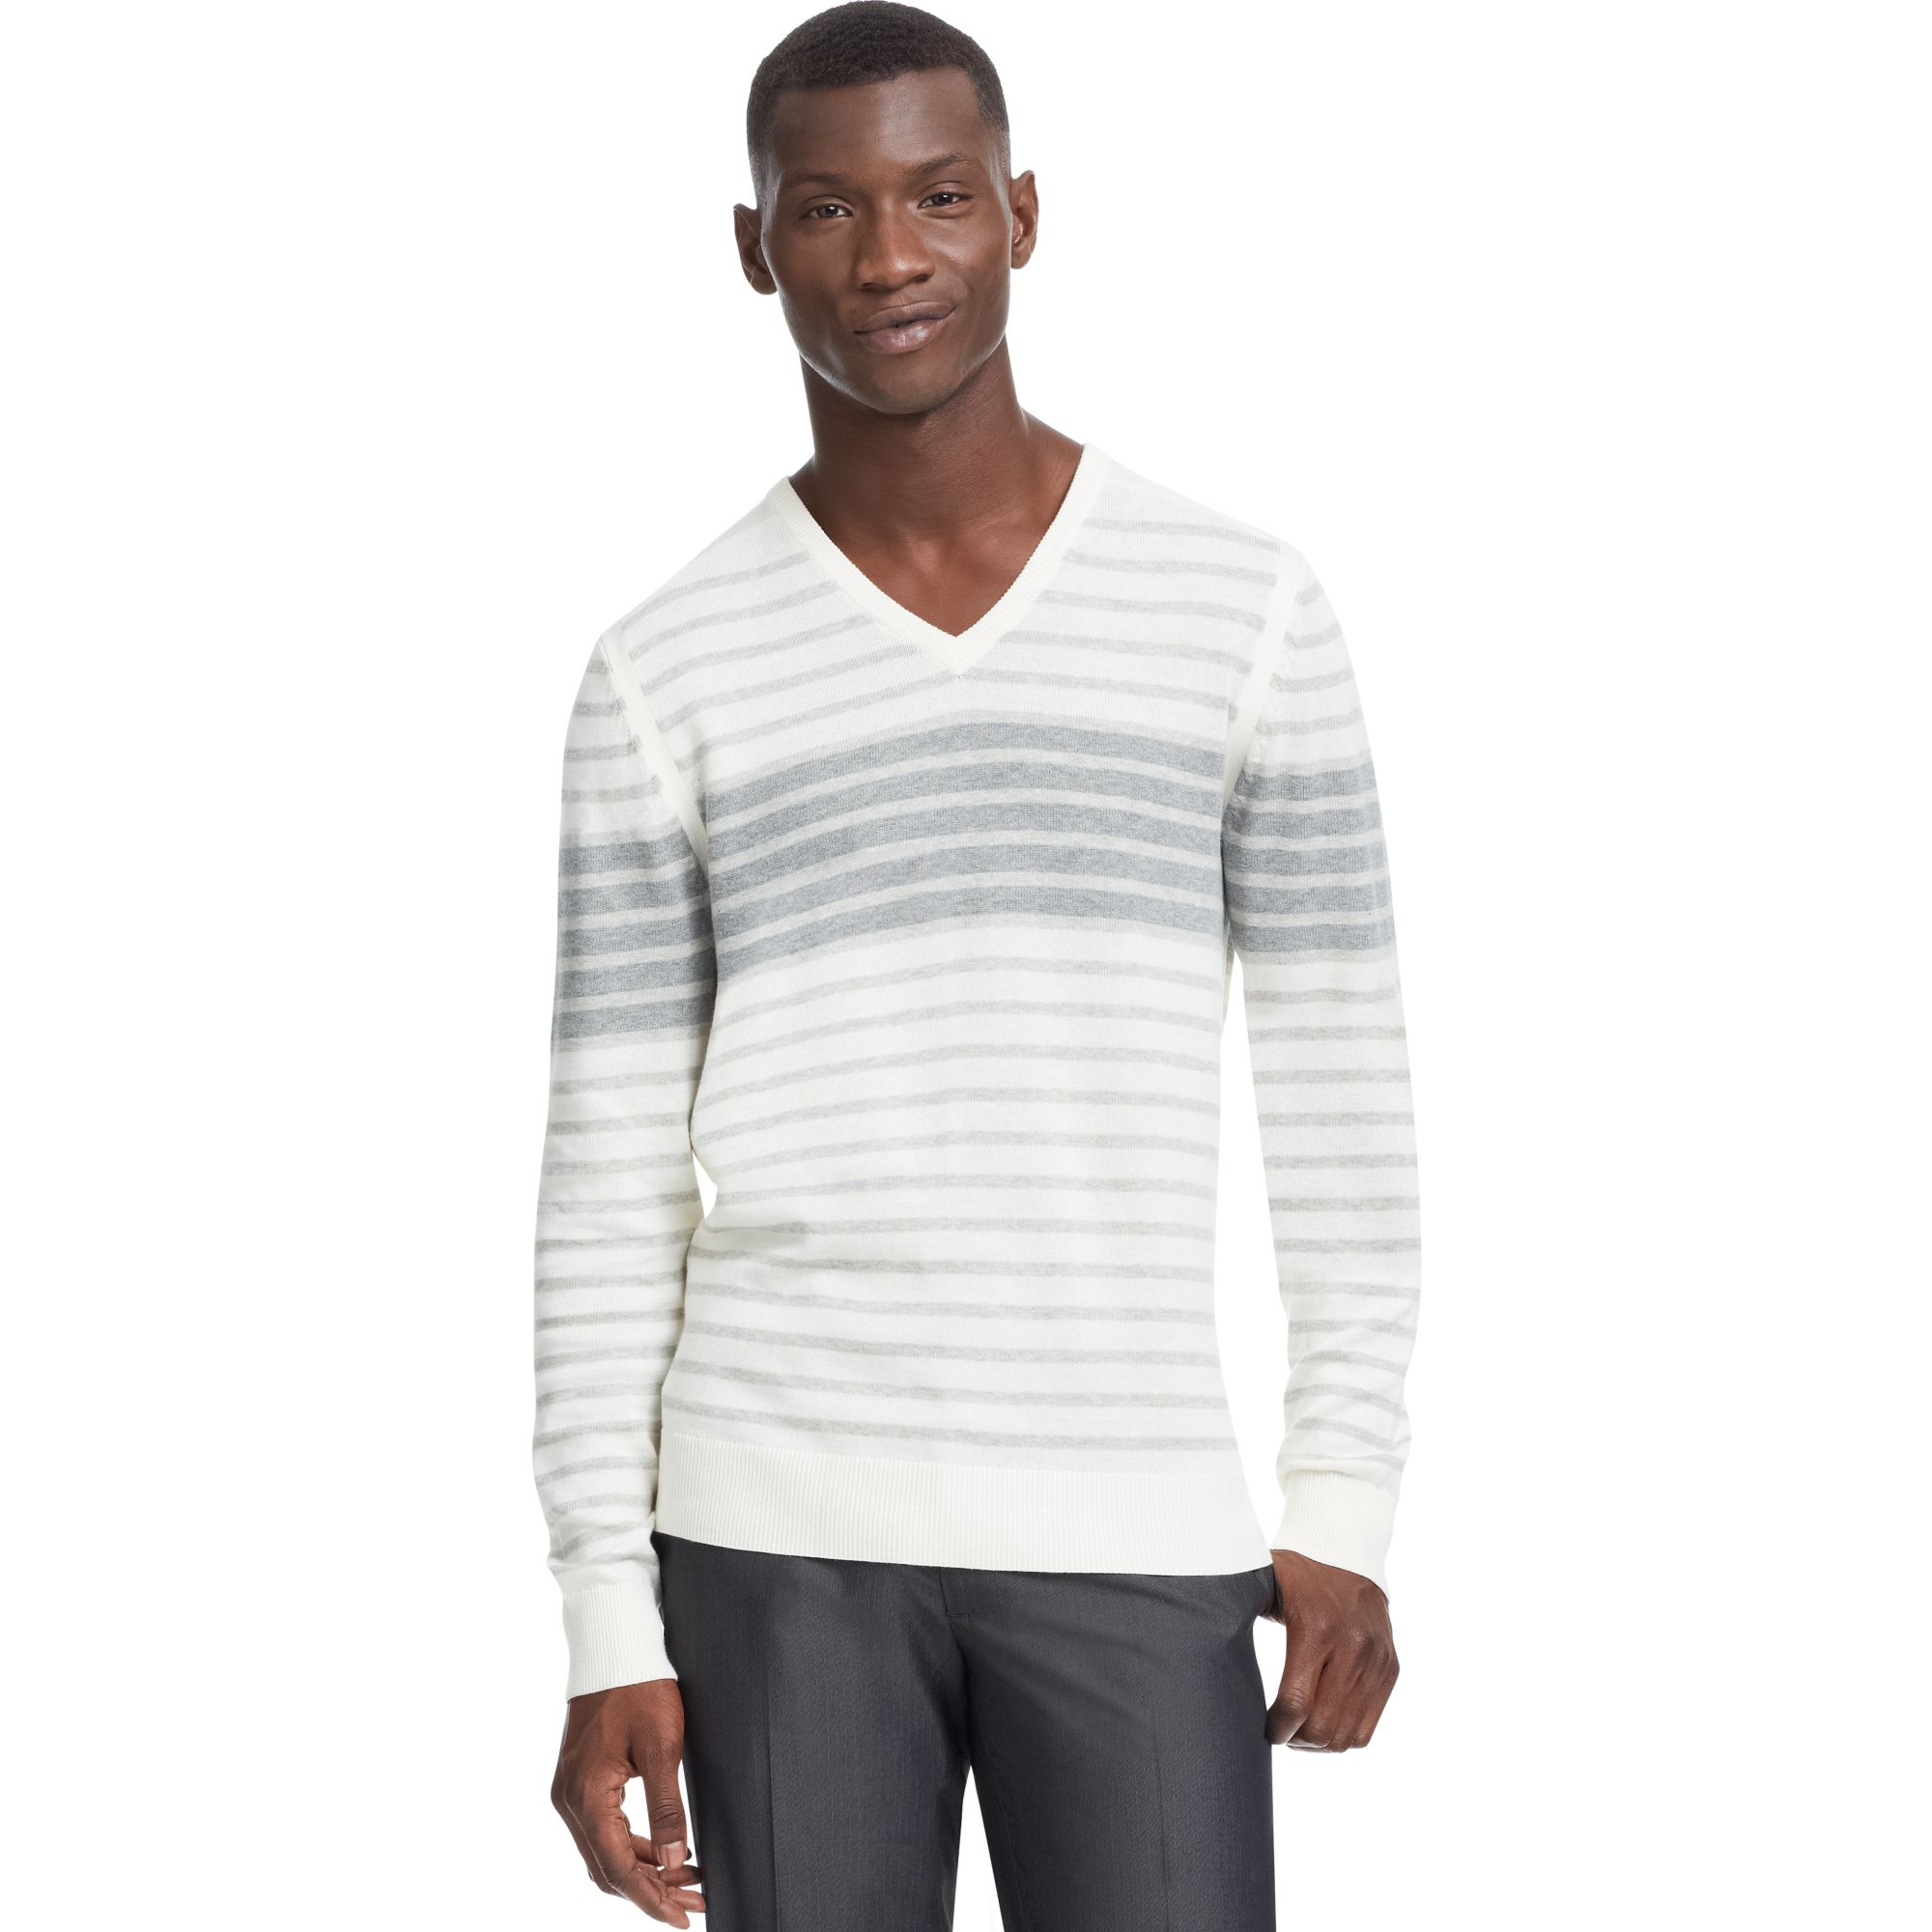 Lyst - Kenneth Cole Reaction Long Sleeve Stripe Vneck Sweater in Gray ...